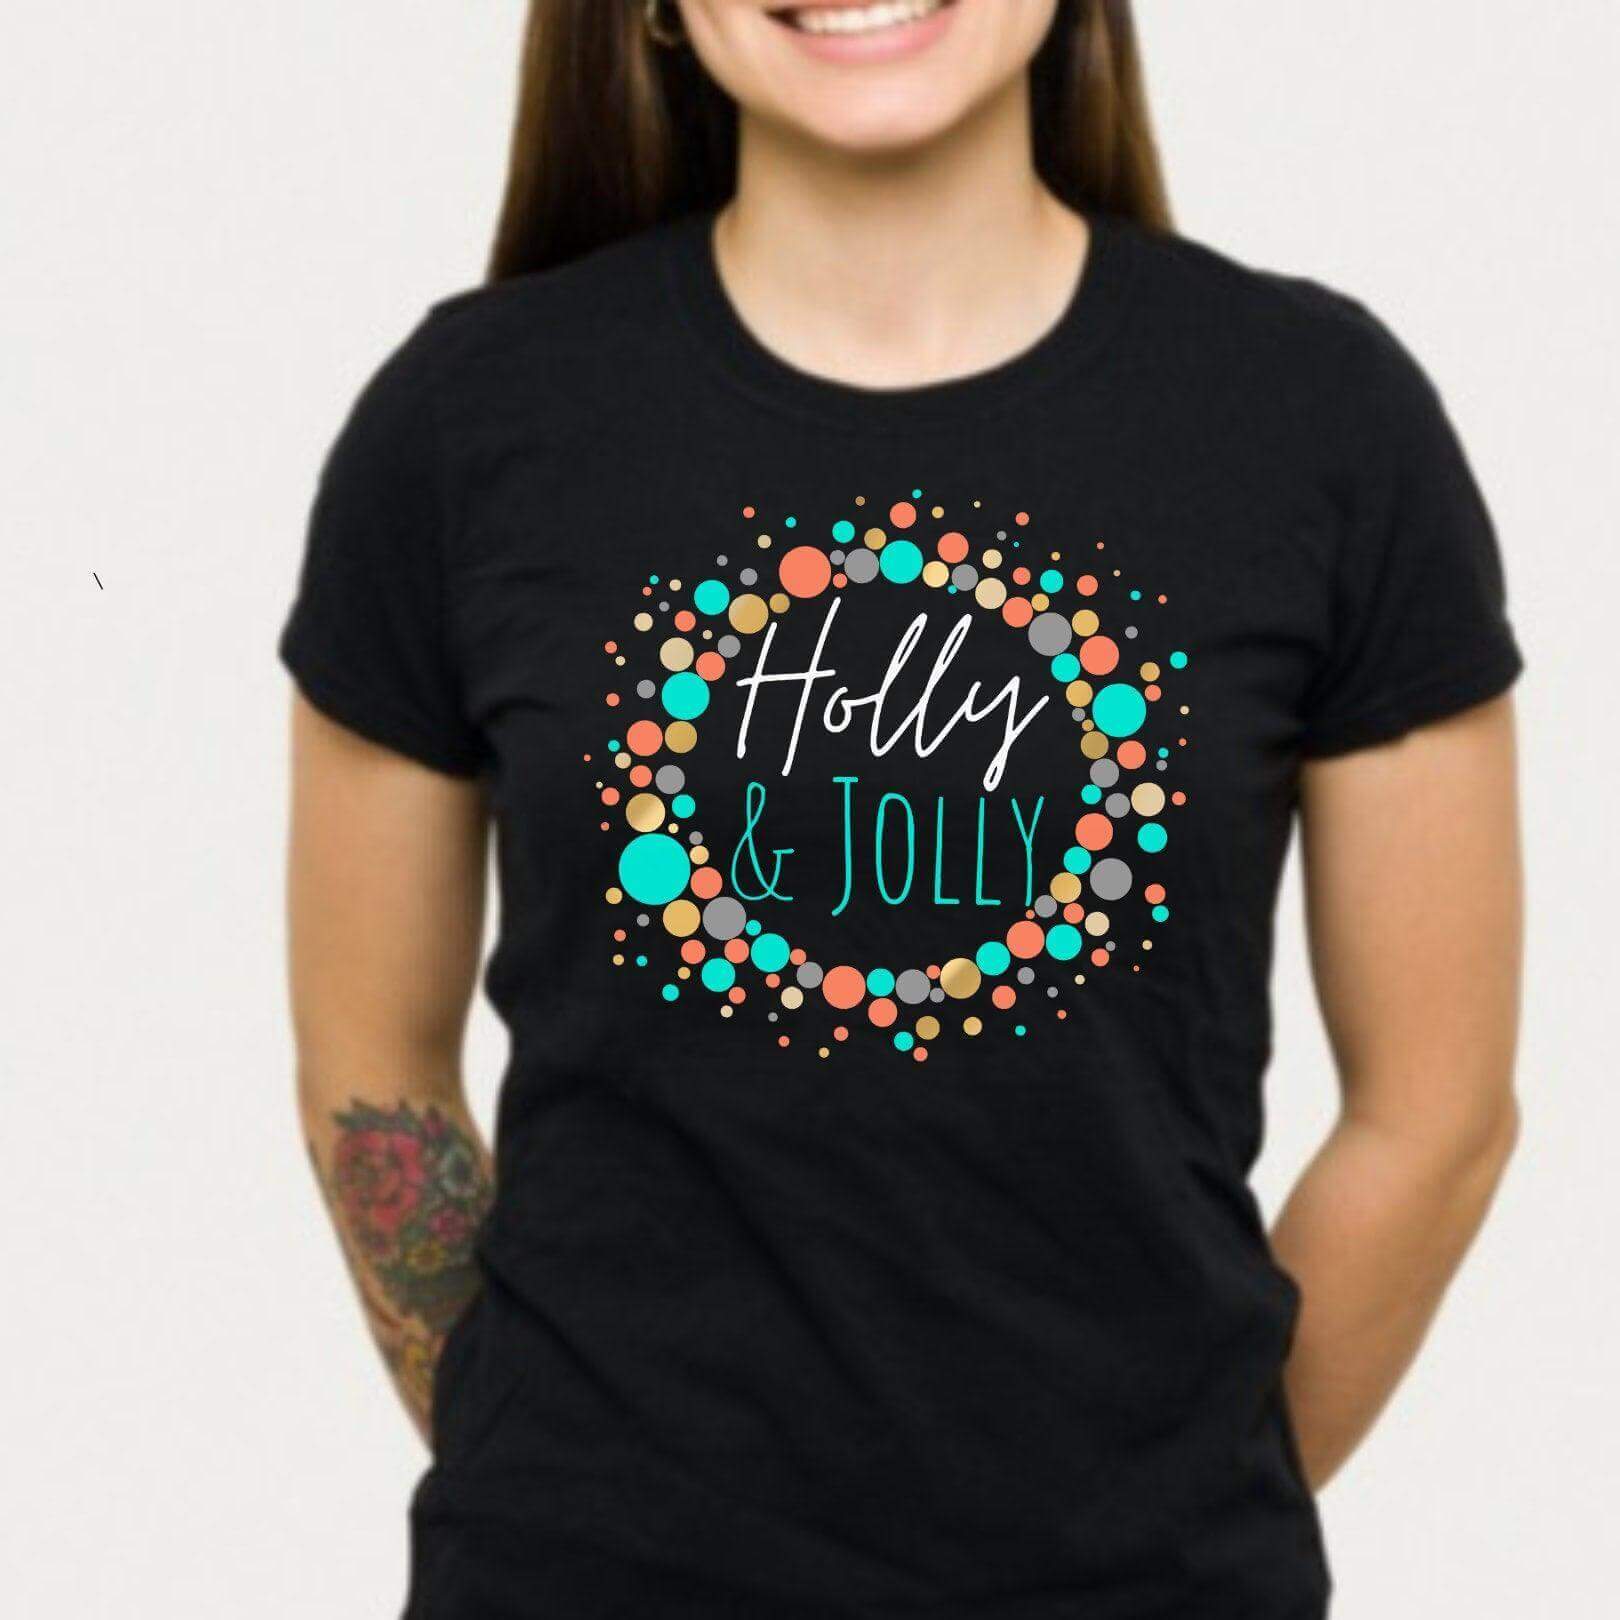 Holly Jolly Christmas Shirt - Winks Design Studio,LLC